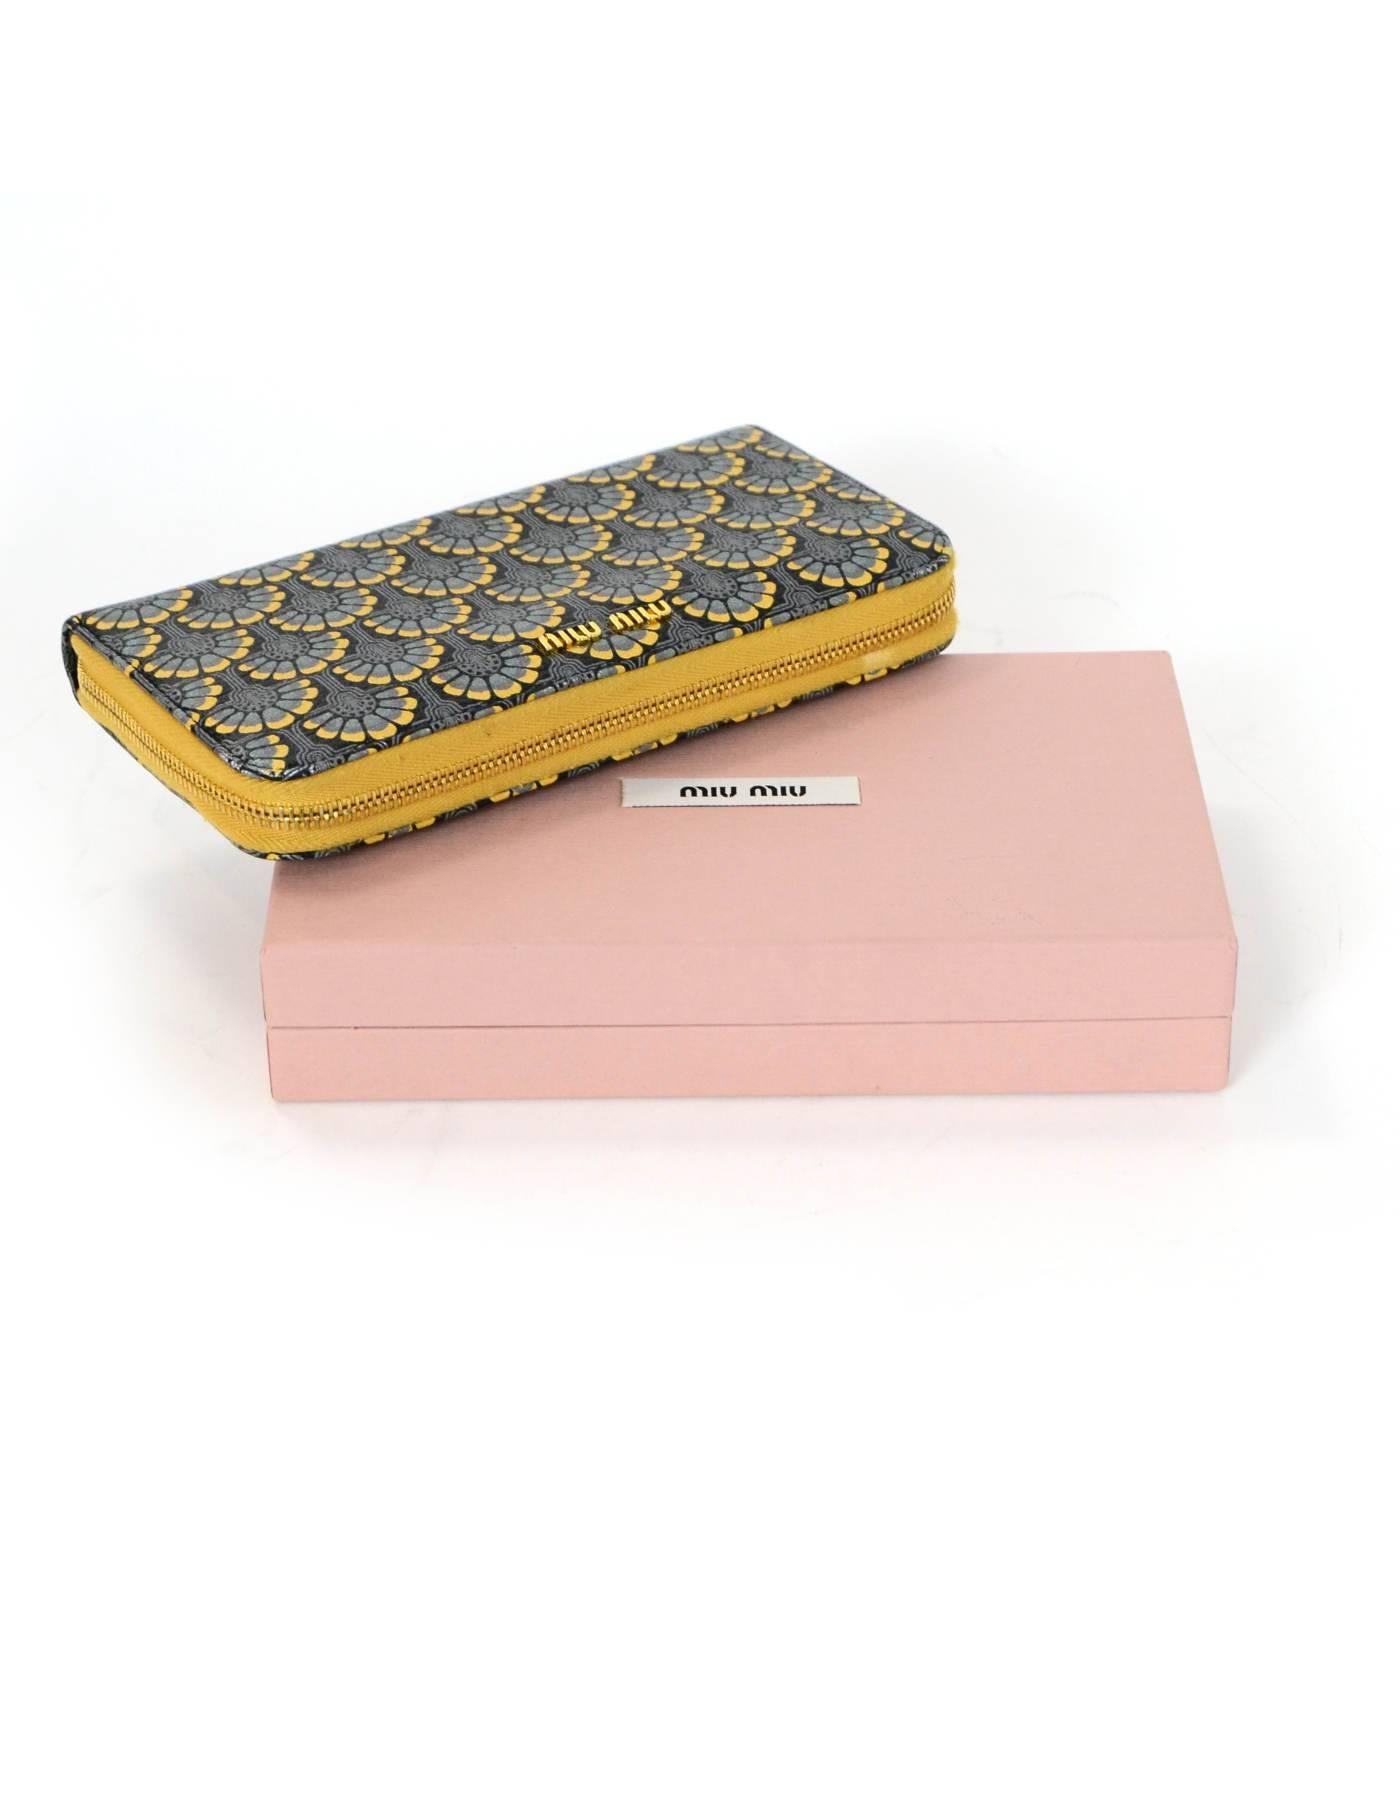 Miu Miu Blue & Yellow Floral Zip Wallet with Box 2